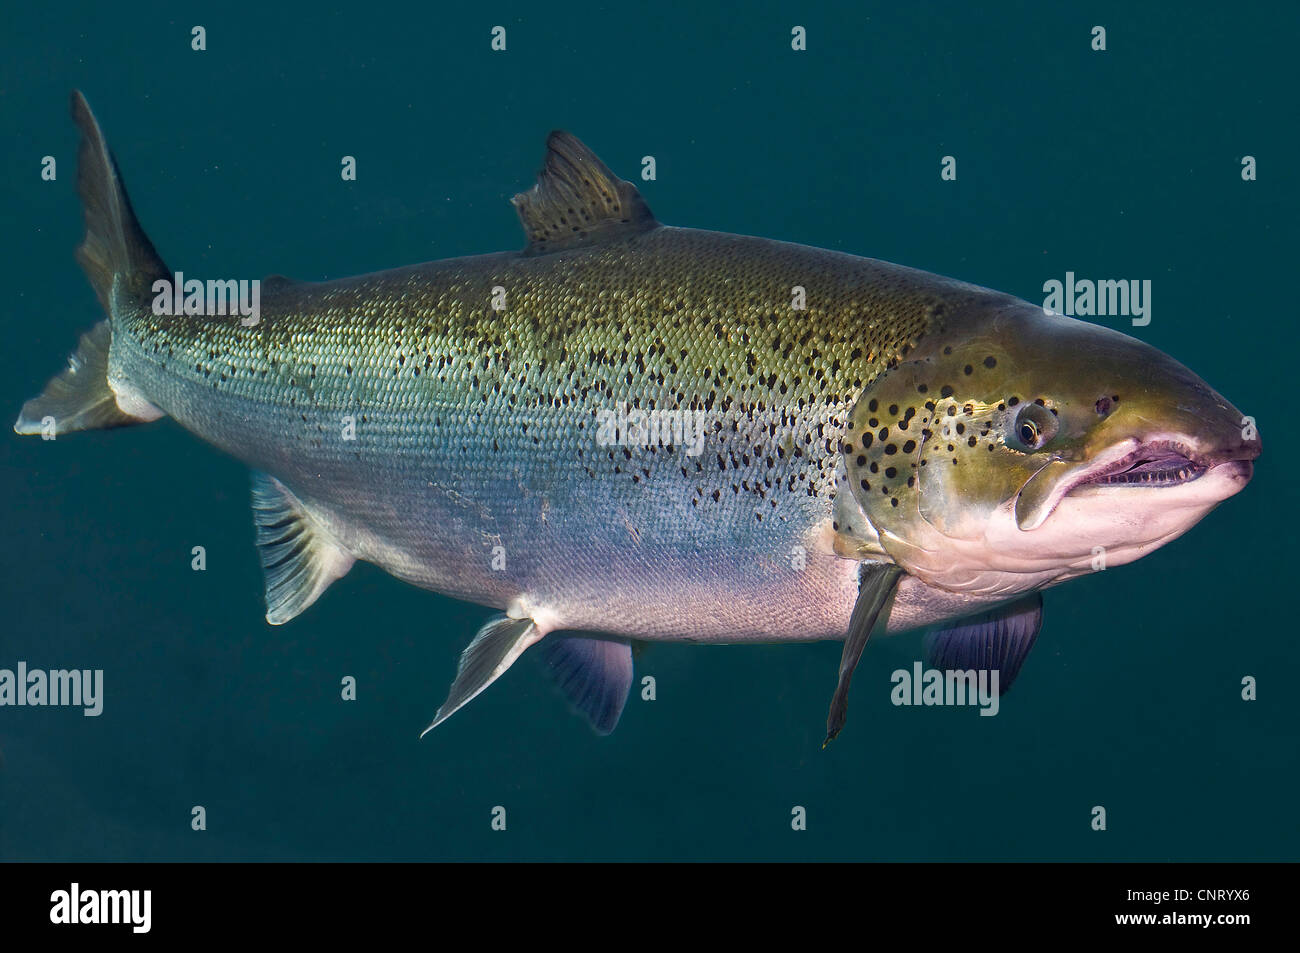 Atlantic salmon, ouananiche, lake Atlantic salmon, landlocked salmon, Sebago salmon (Salmo salar), swimming Stock Photo